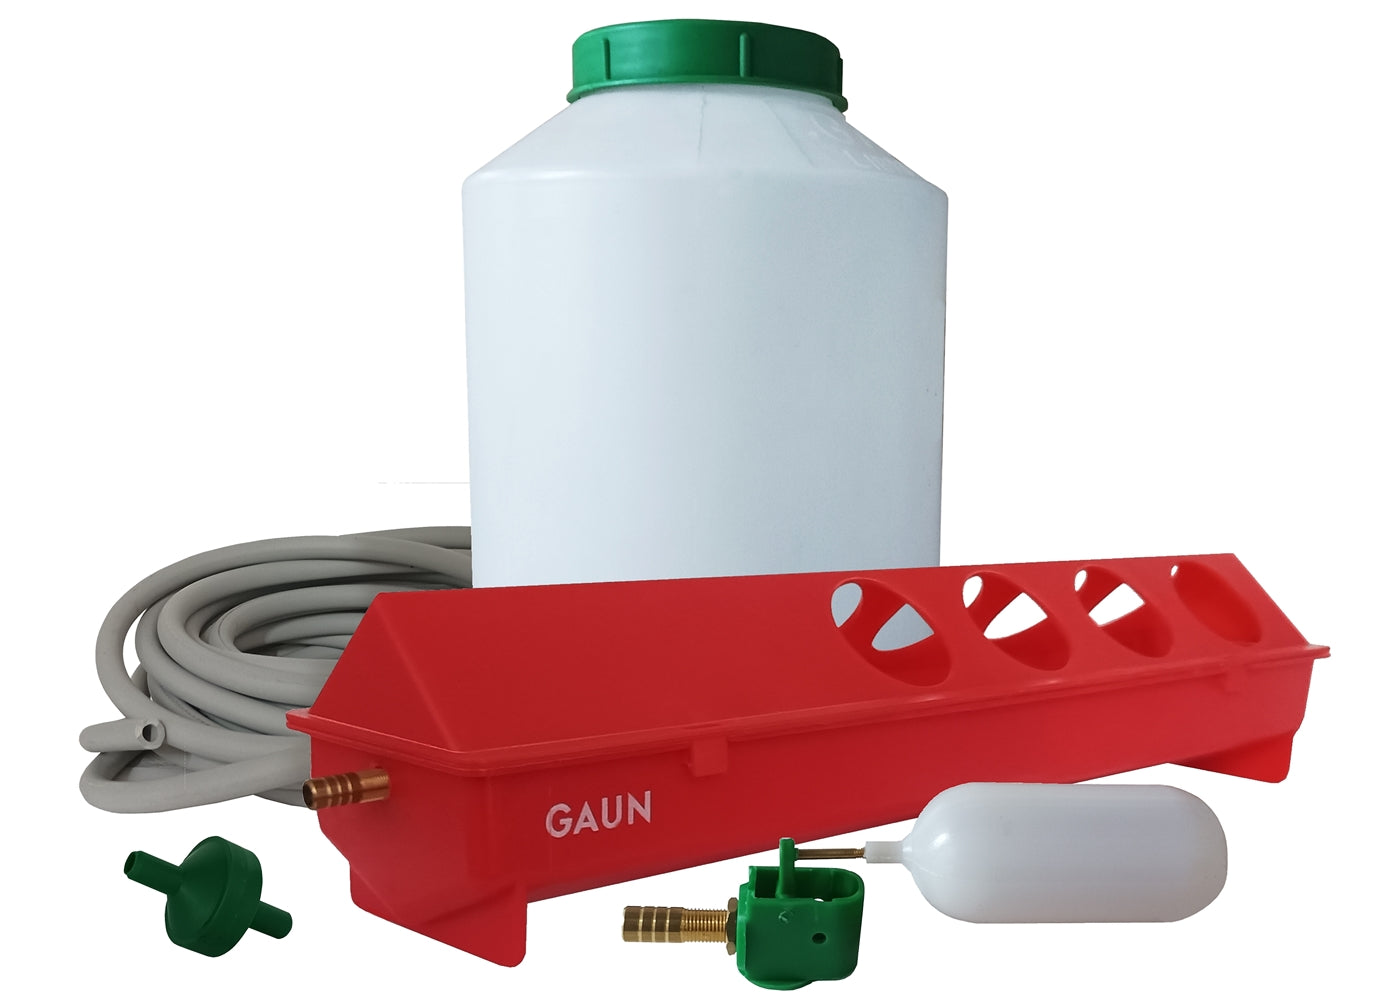 Gaun - Automatic Ball Valve Poultry Drinker Kit - Buy Online SPR Centre UK